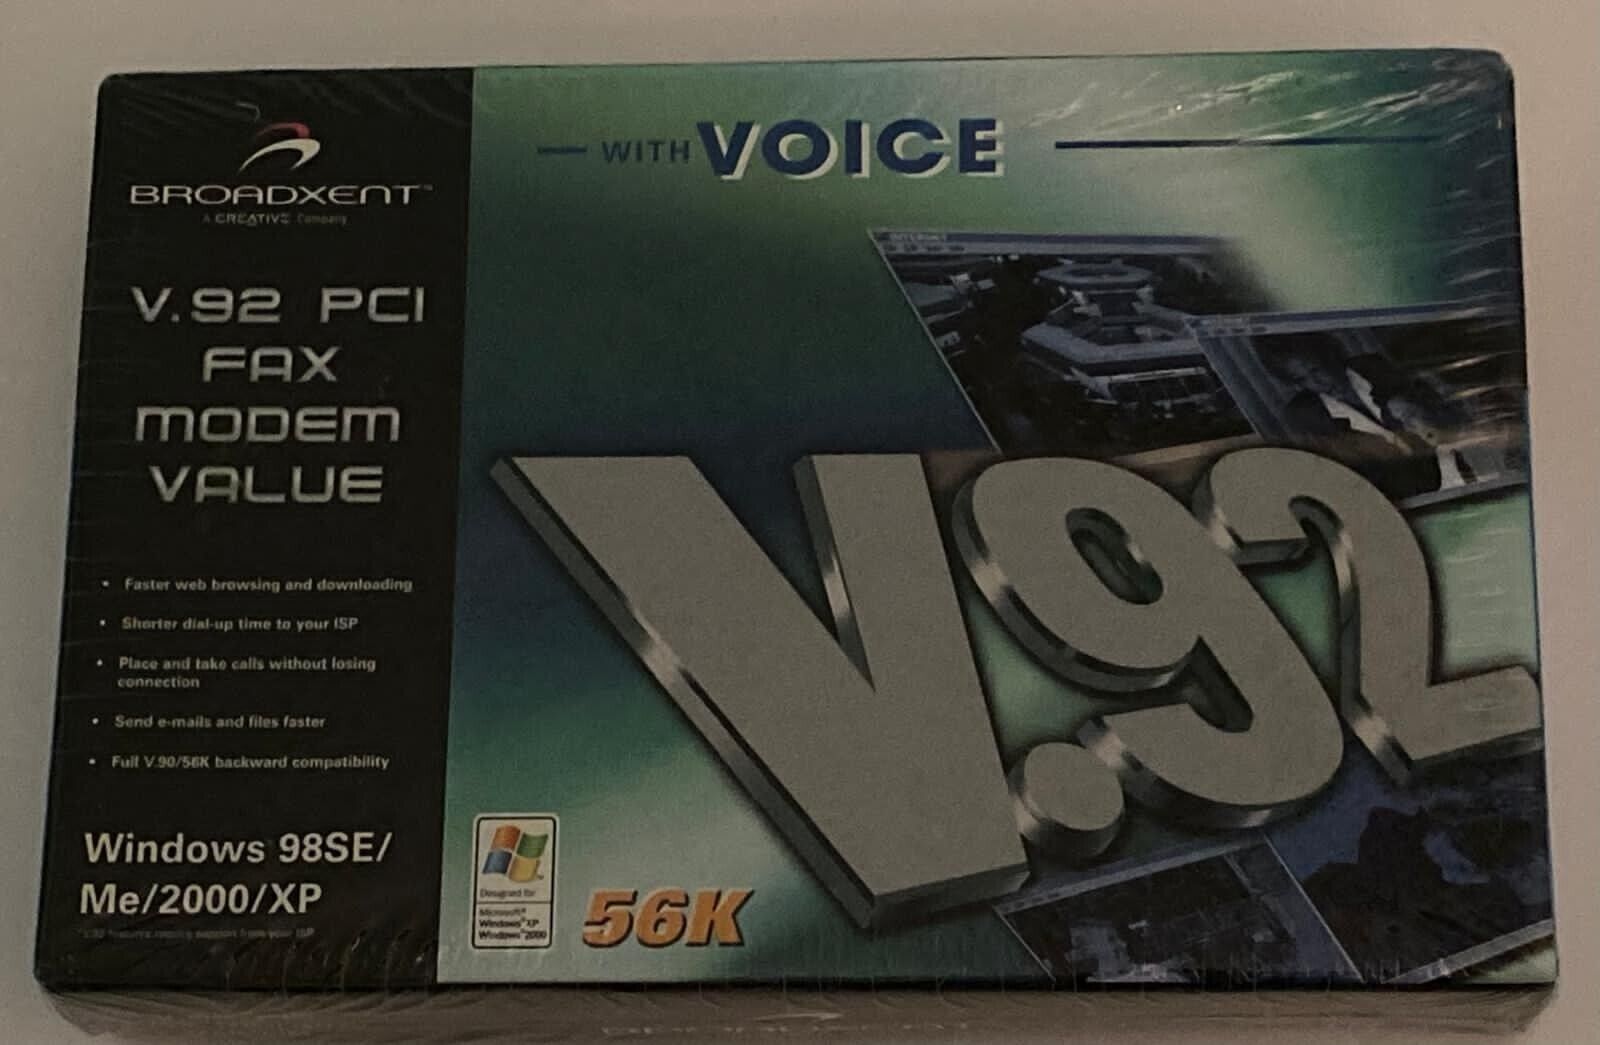 New Broadxent V.92 PCI Fax Modem Value With Voice 56K Windows 98SE ME 2000 XP